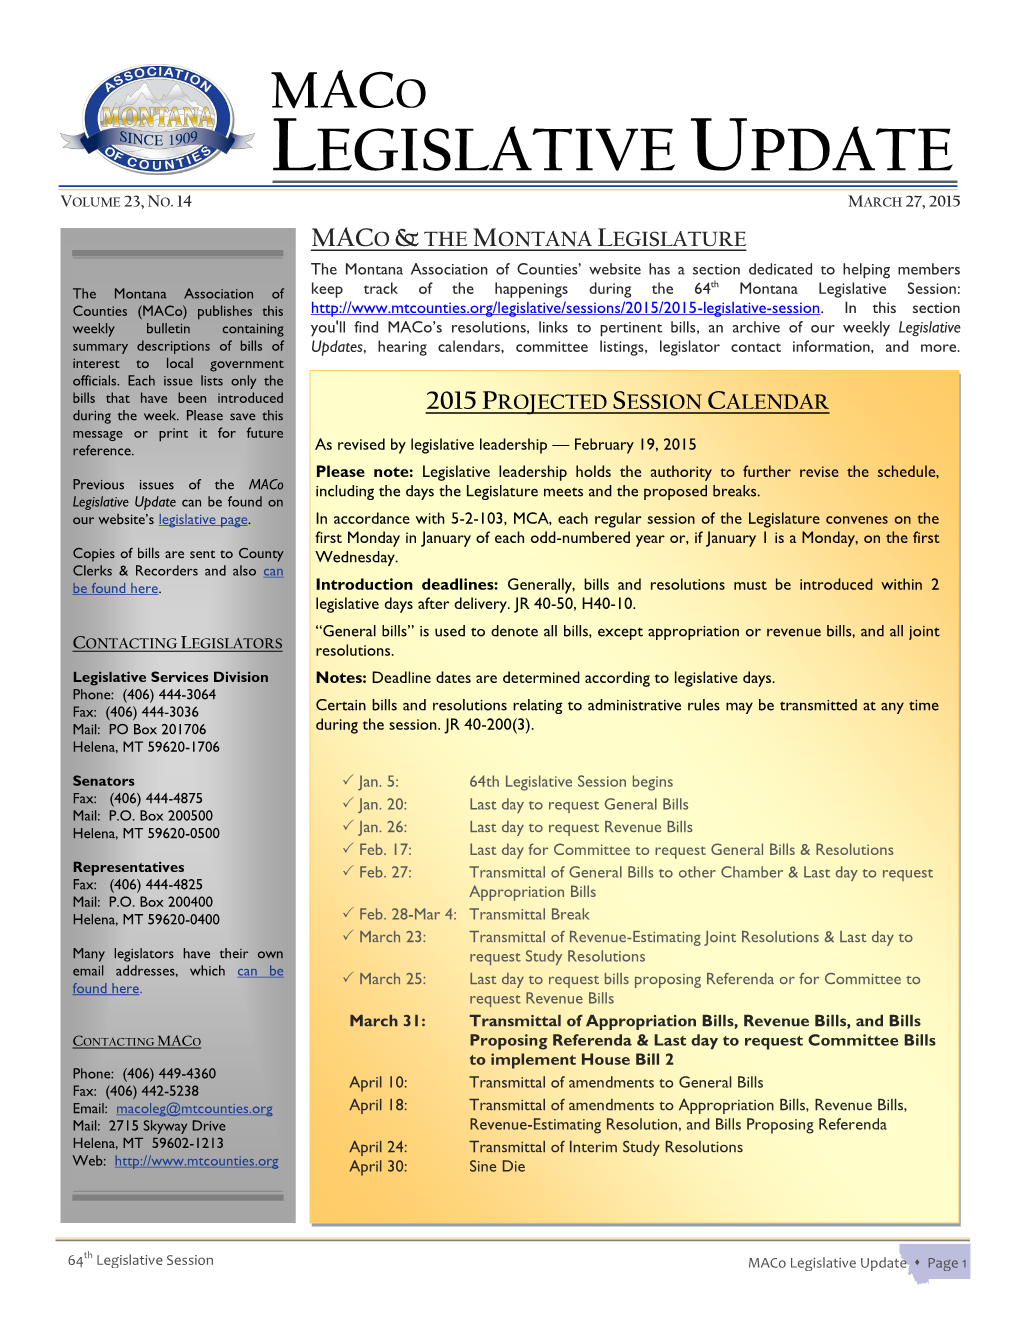 Maco Legislative Update Volume 23, No